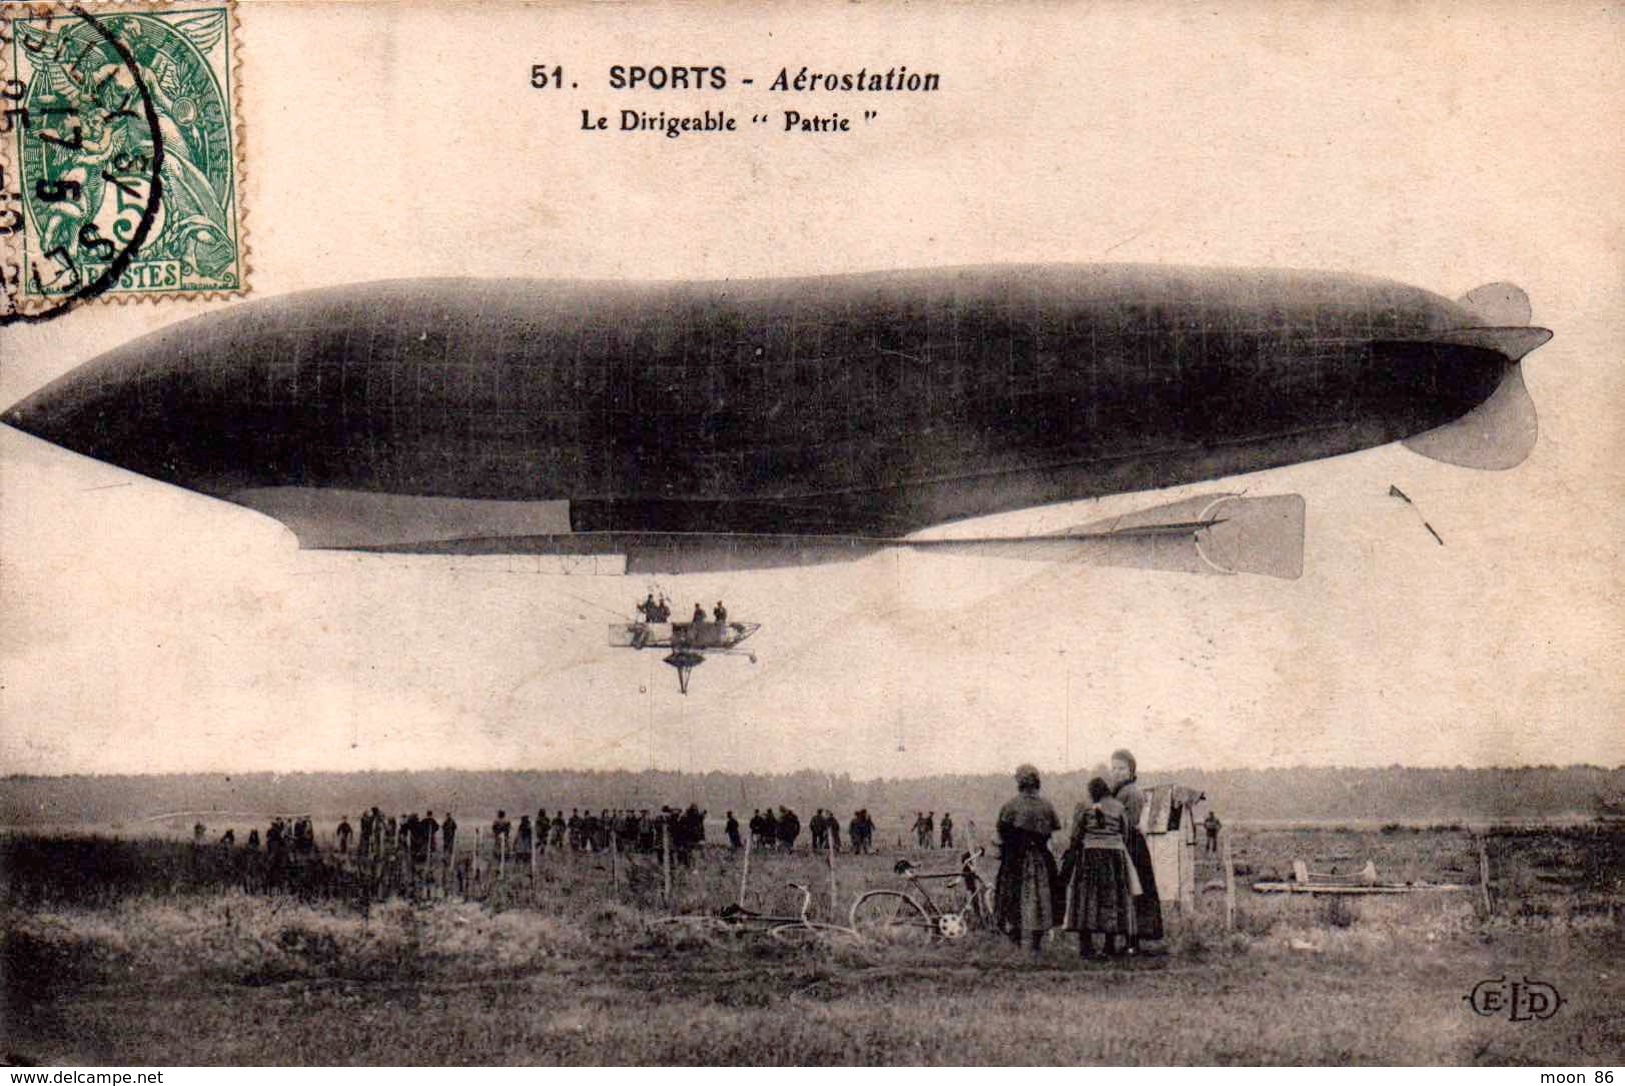 AVIATION - DIRIGEABLE PATRIE - AEROSTATION - Zeppeline